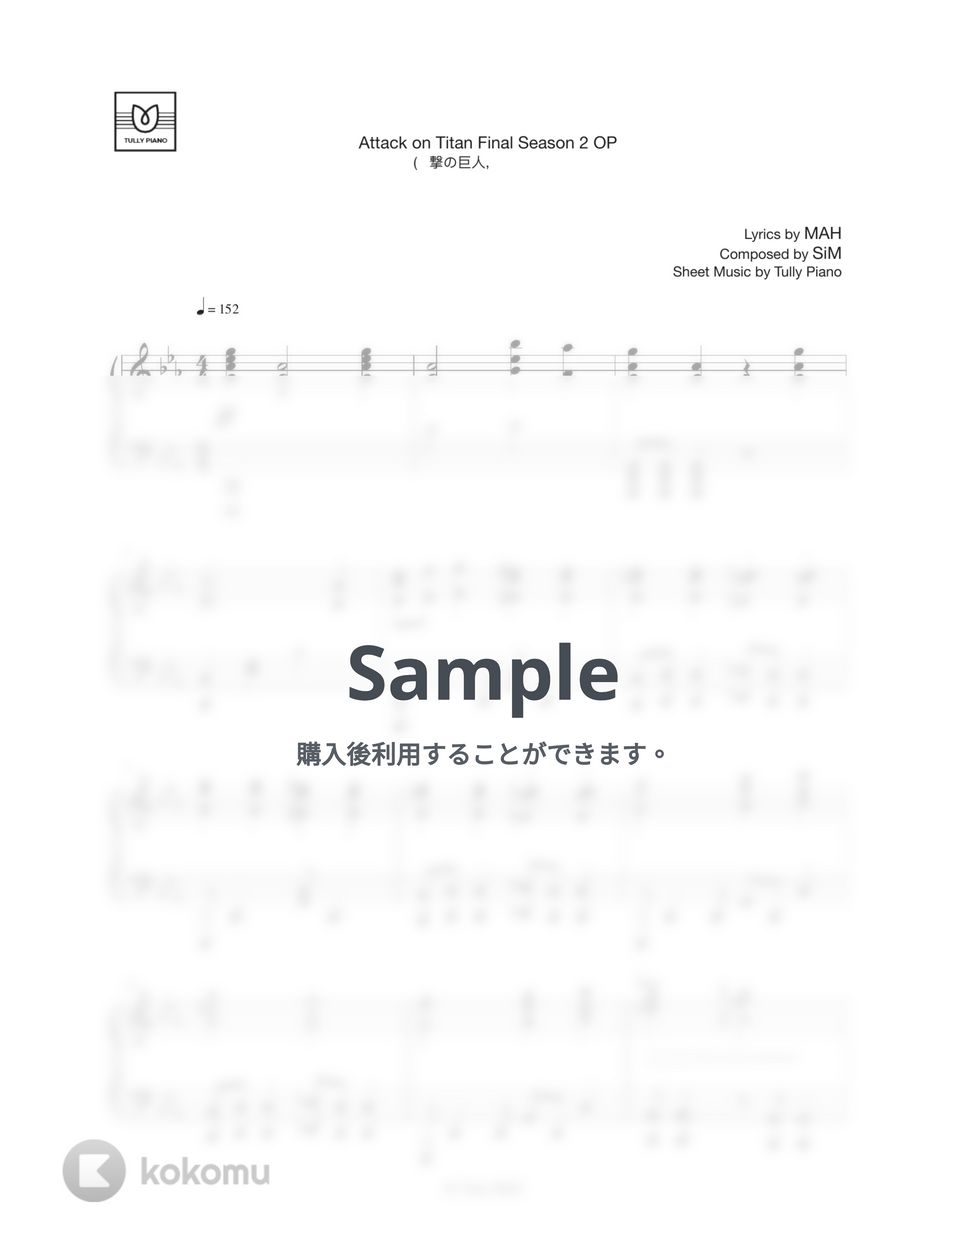 SiM - The Rumbling (進撃の巨人 S4 part2 OP) (雄大なバージョン) by Tully Piano